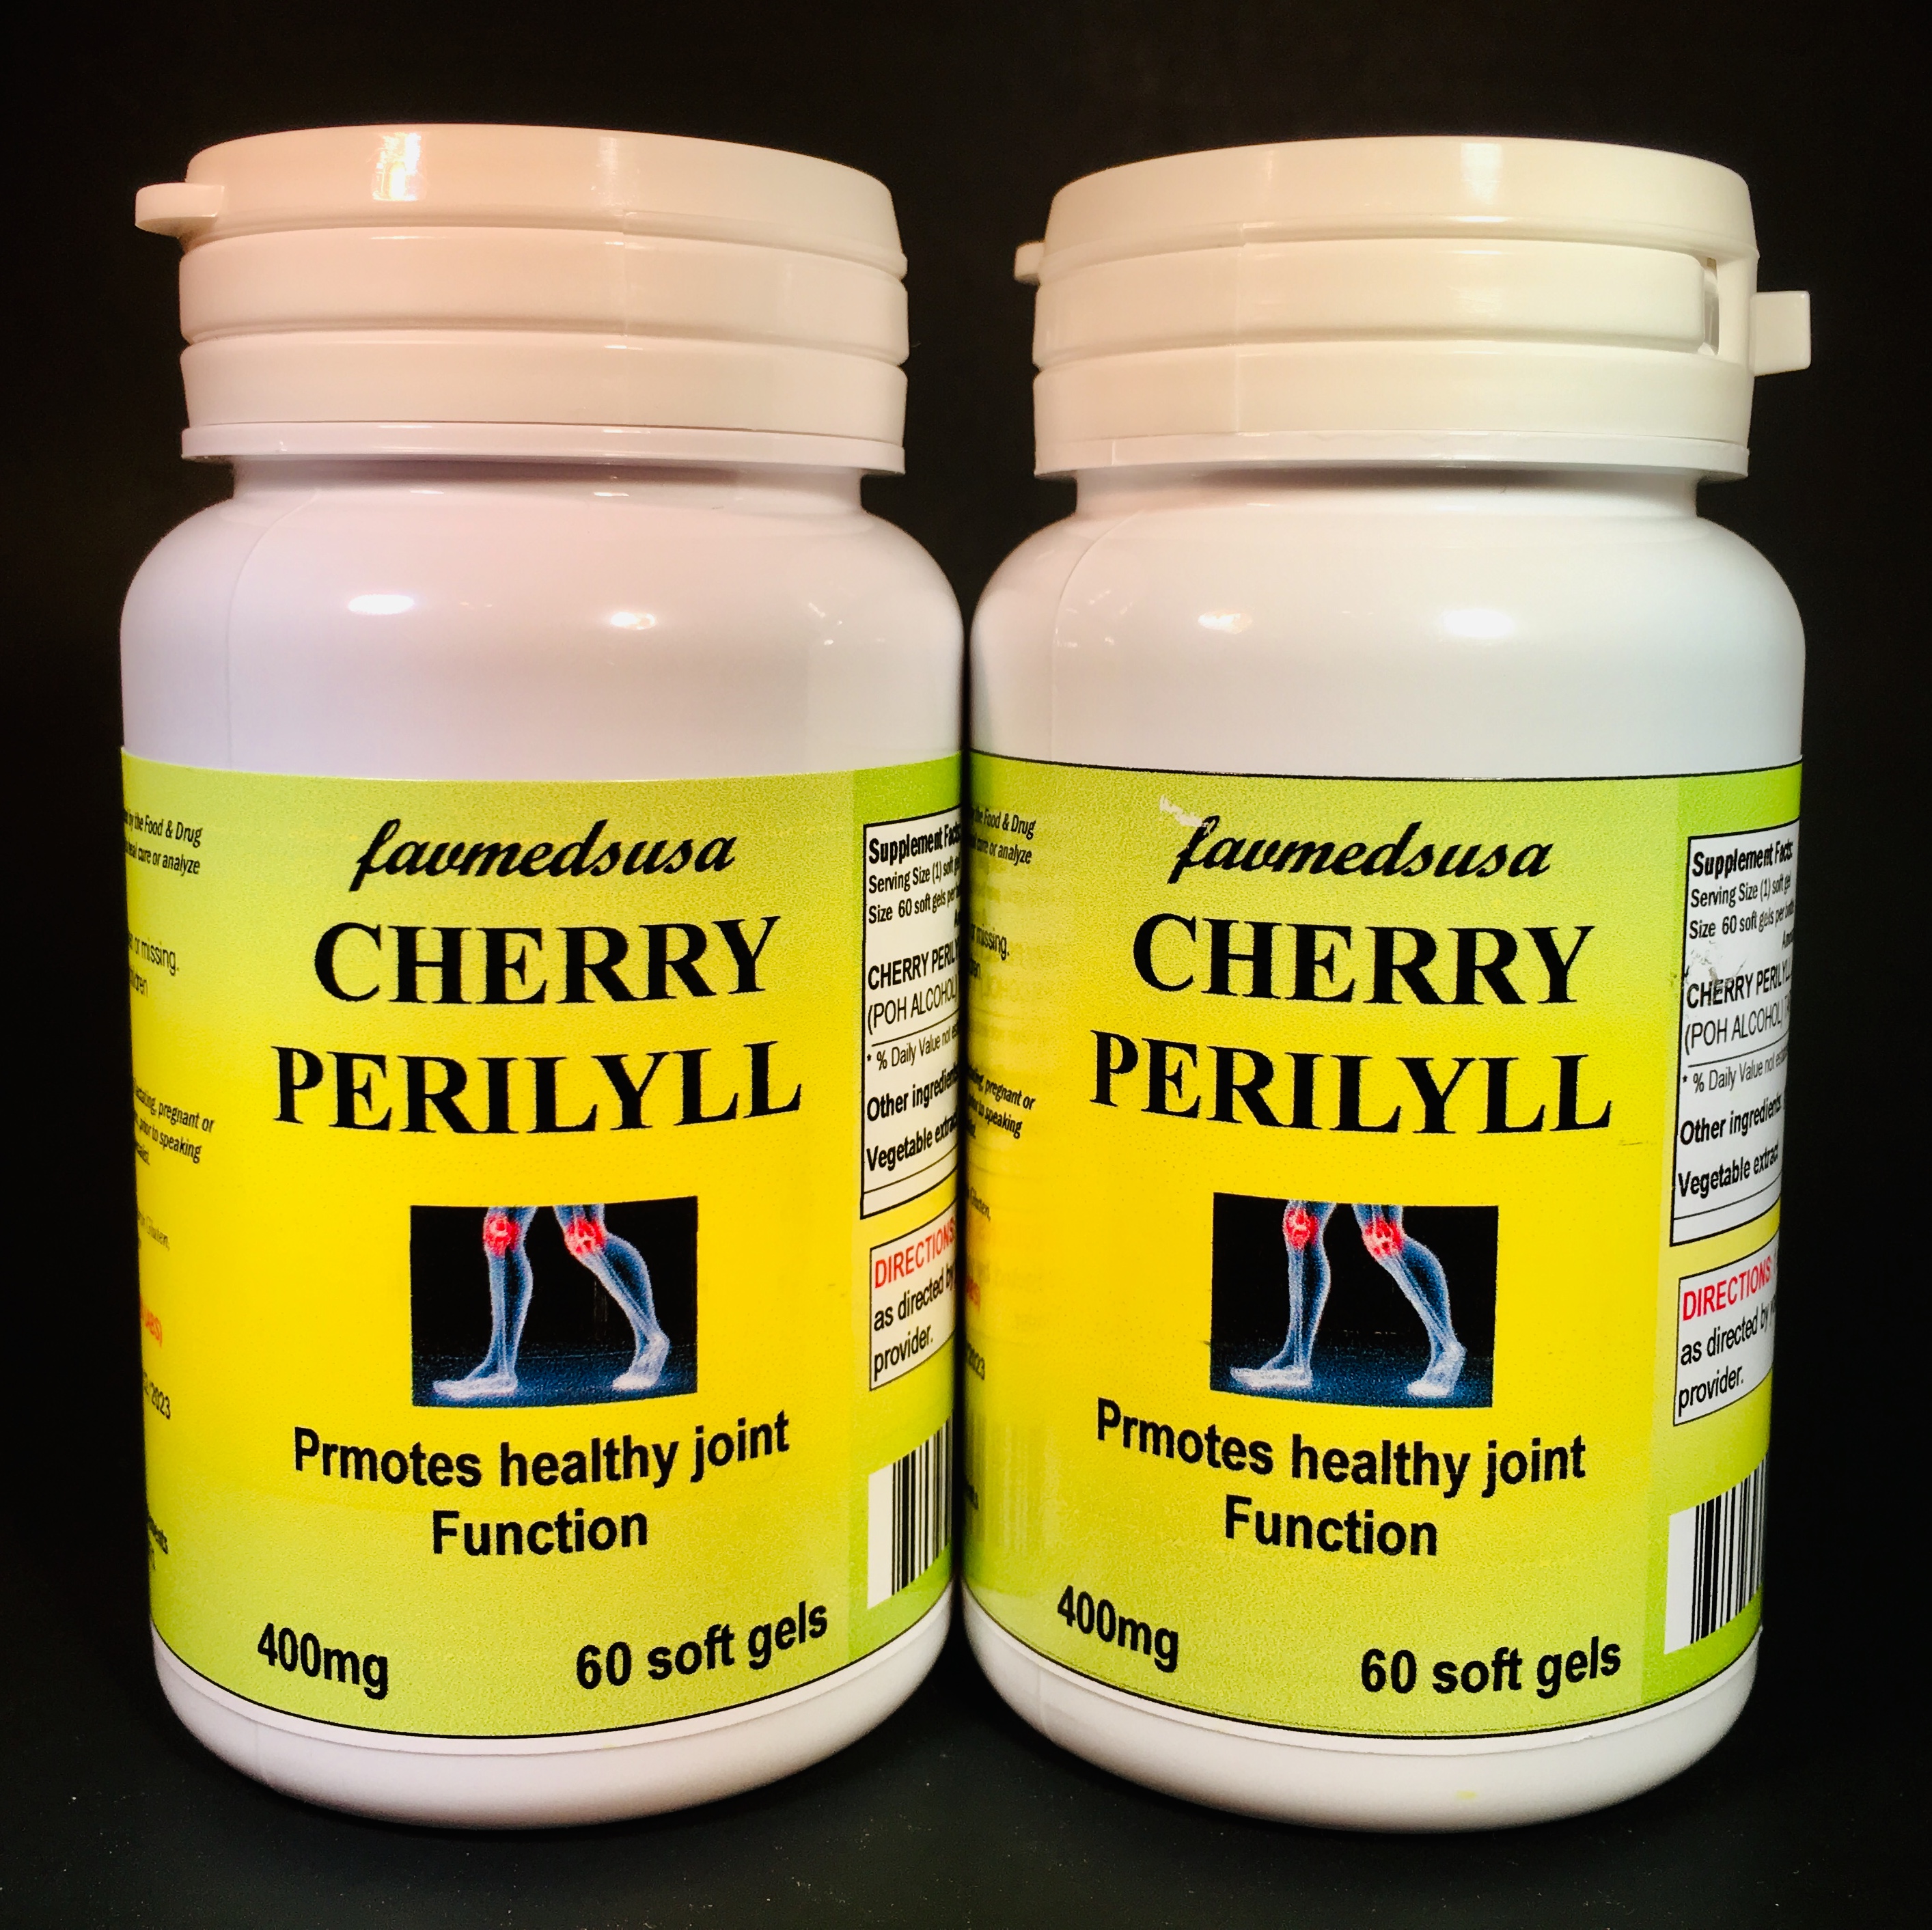 Cherry Perrillyl, Gout aid - 120 (2x60) soft gels